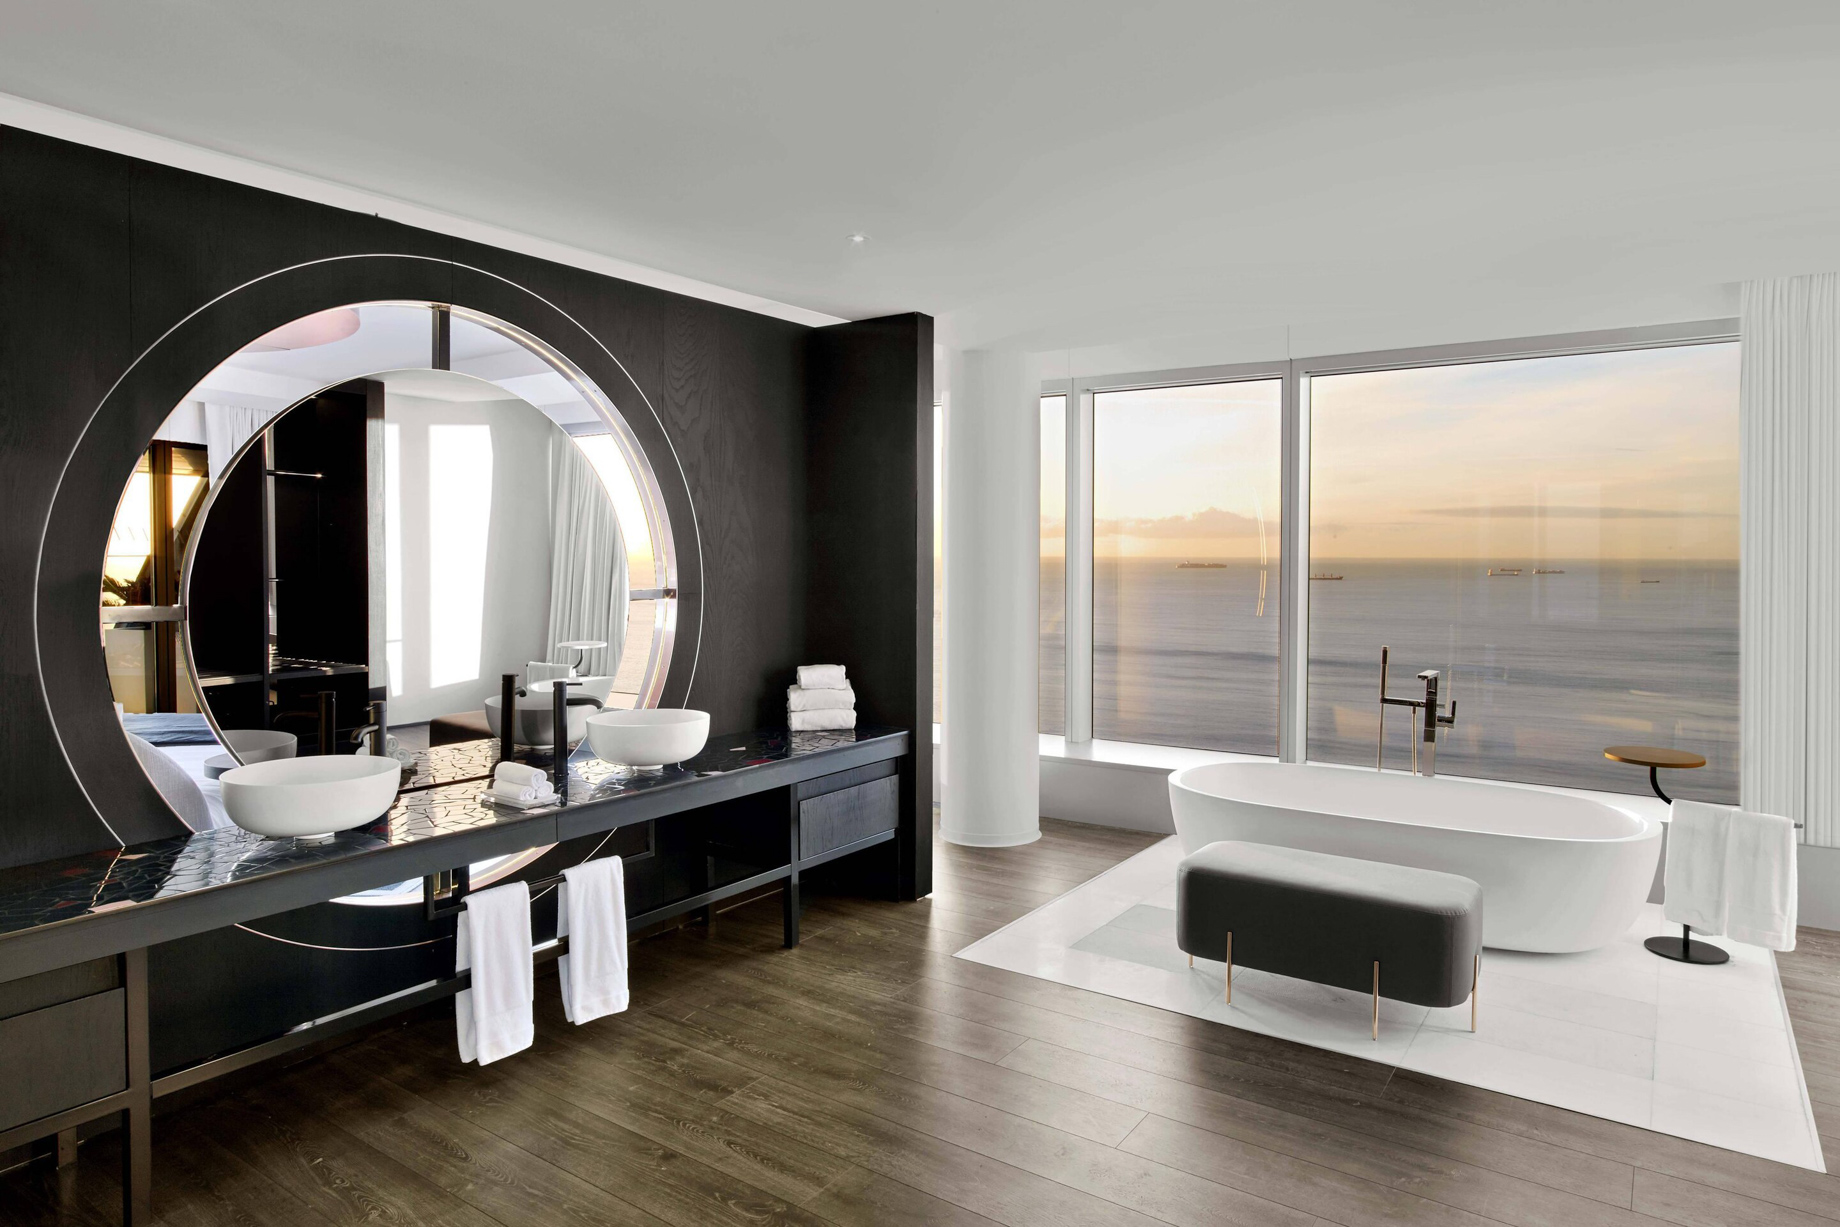 W Barcelona Hotel - Barcelona, Spain - E WOW Suite Bathroom